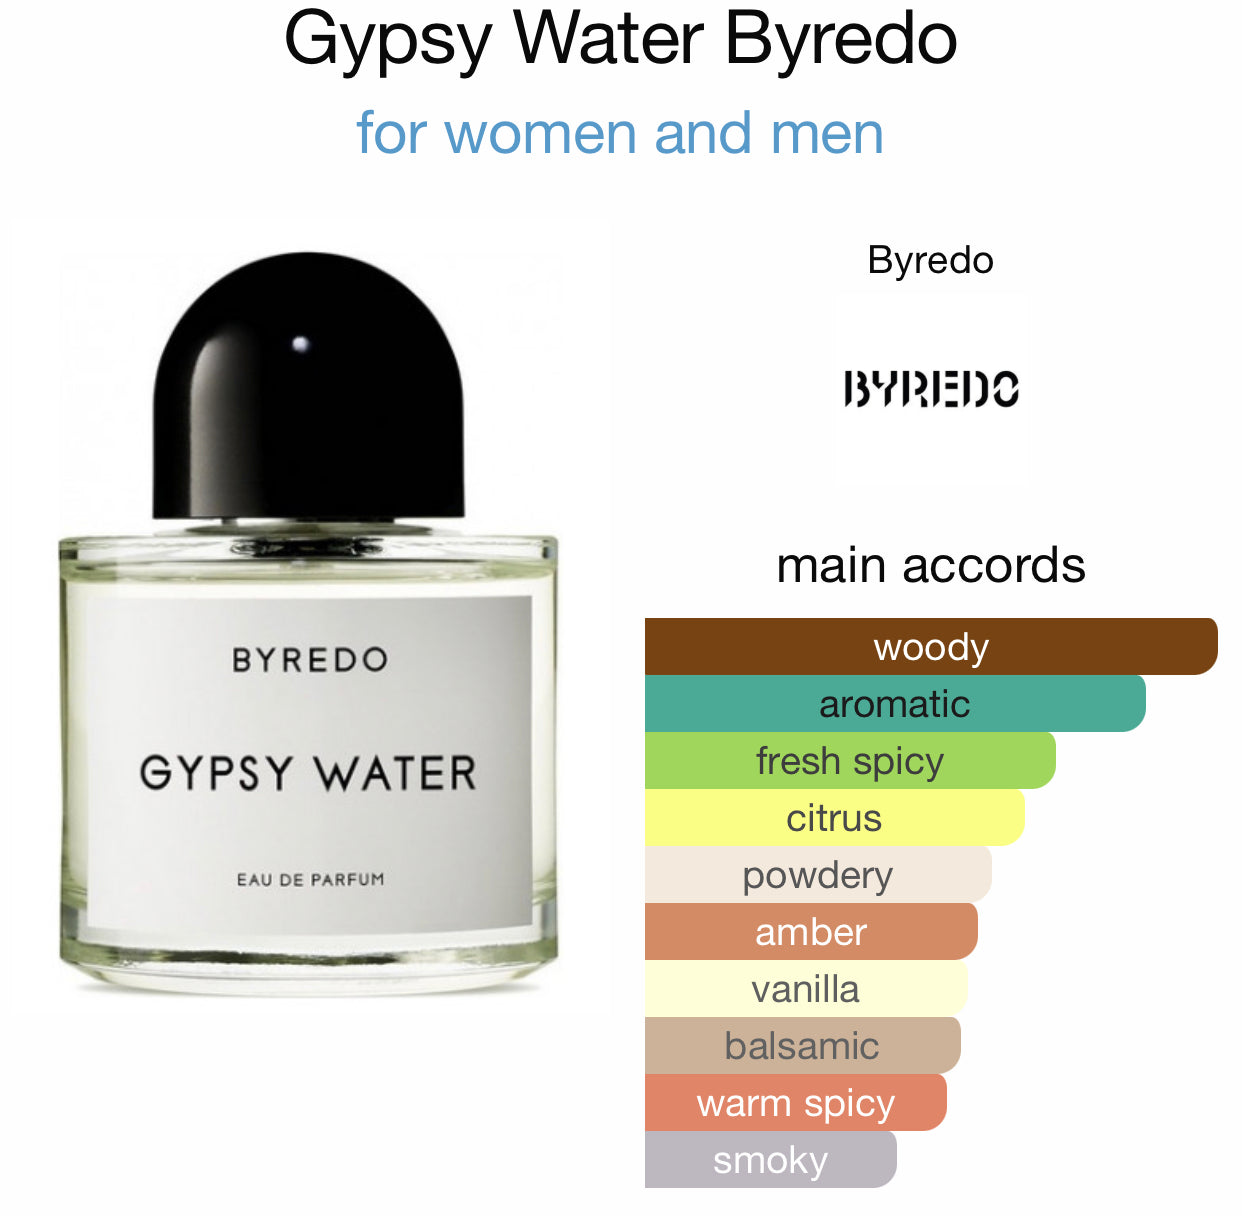 Inspired by “G” Water Eau de Parfum